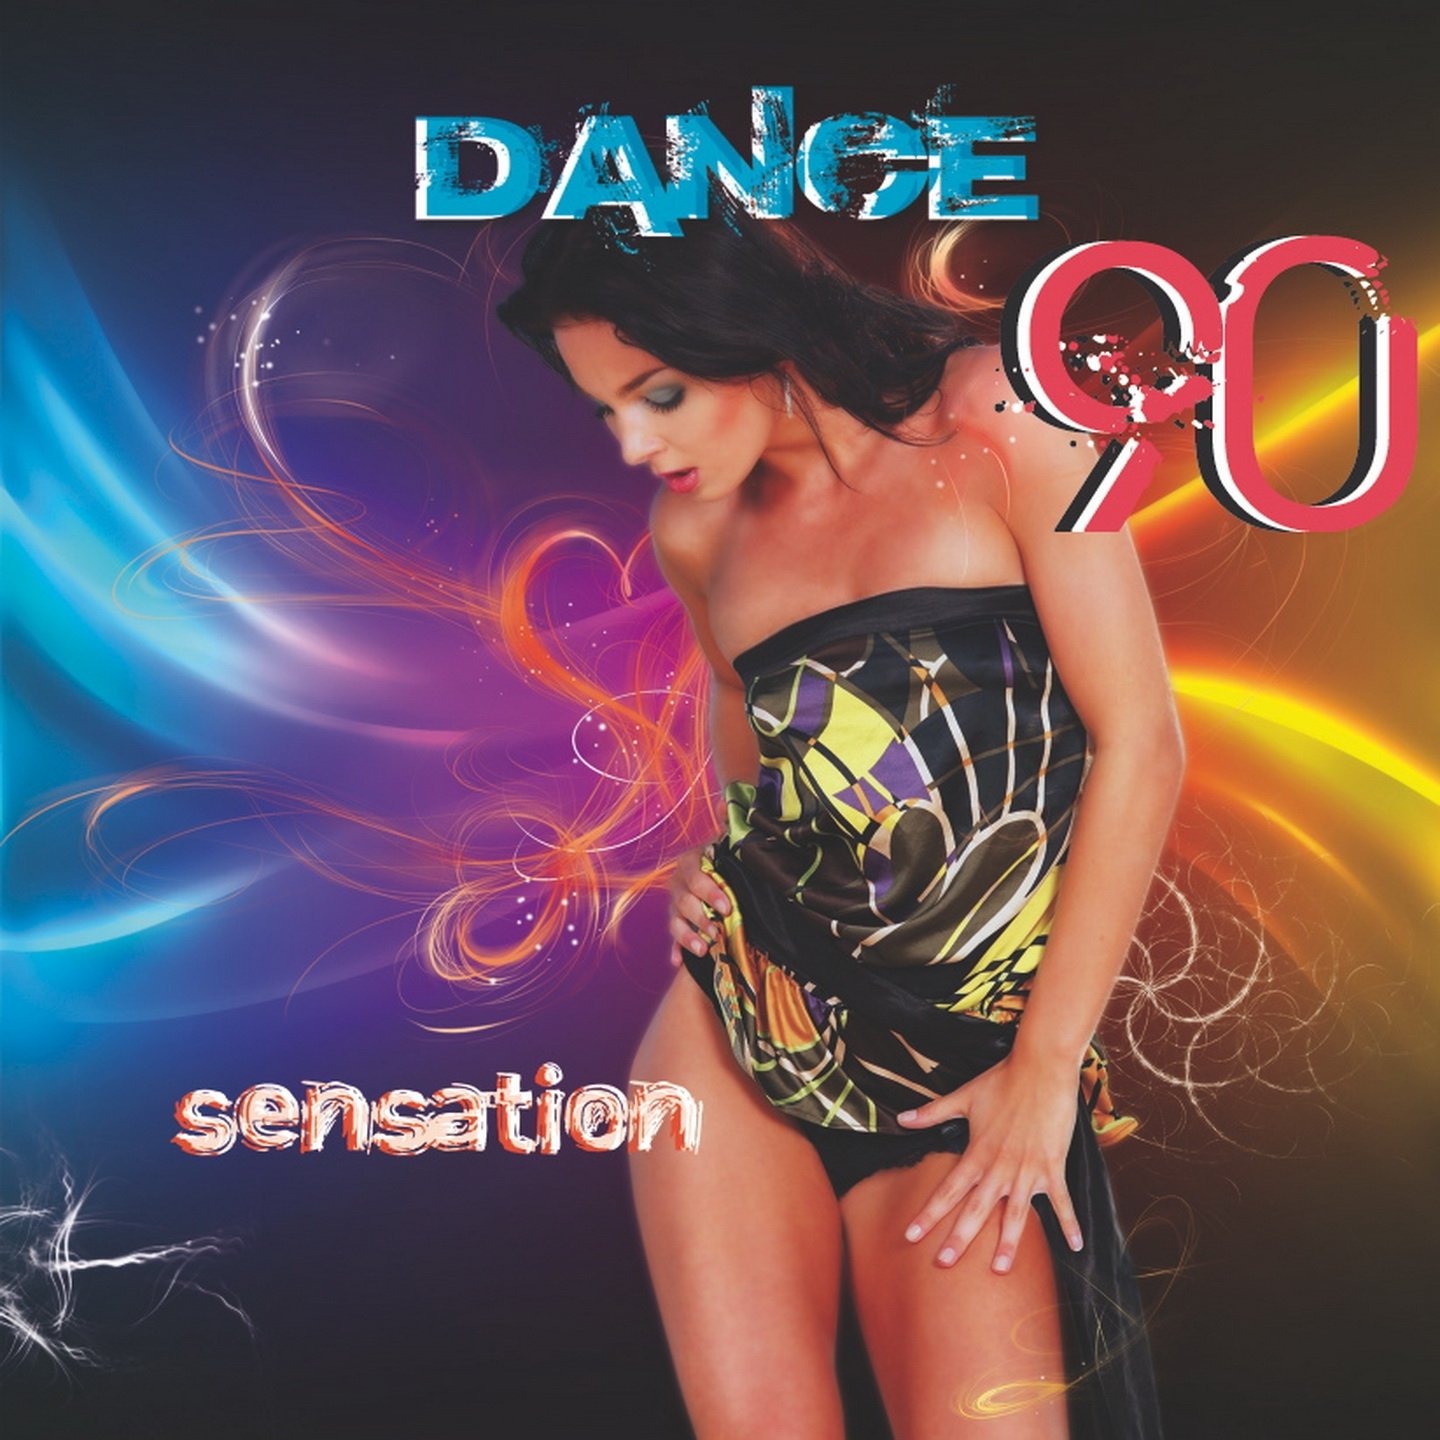 Top eurodance music. Disco обложка. Eurodance обложка. Disco обложки альбомов. Dance обложка.